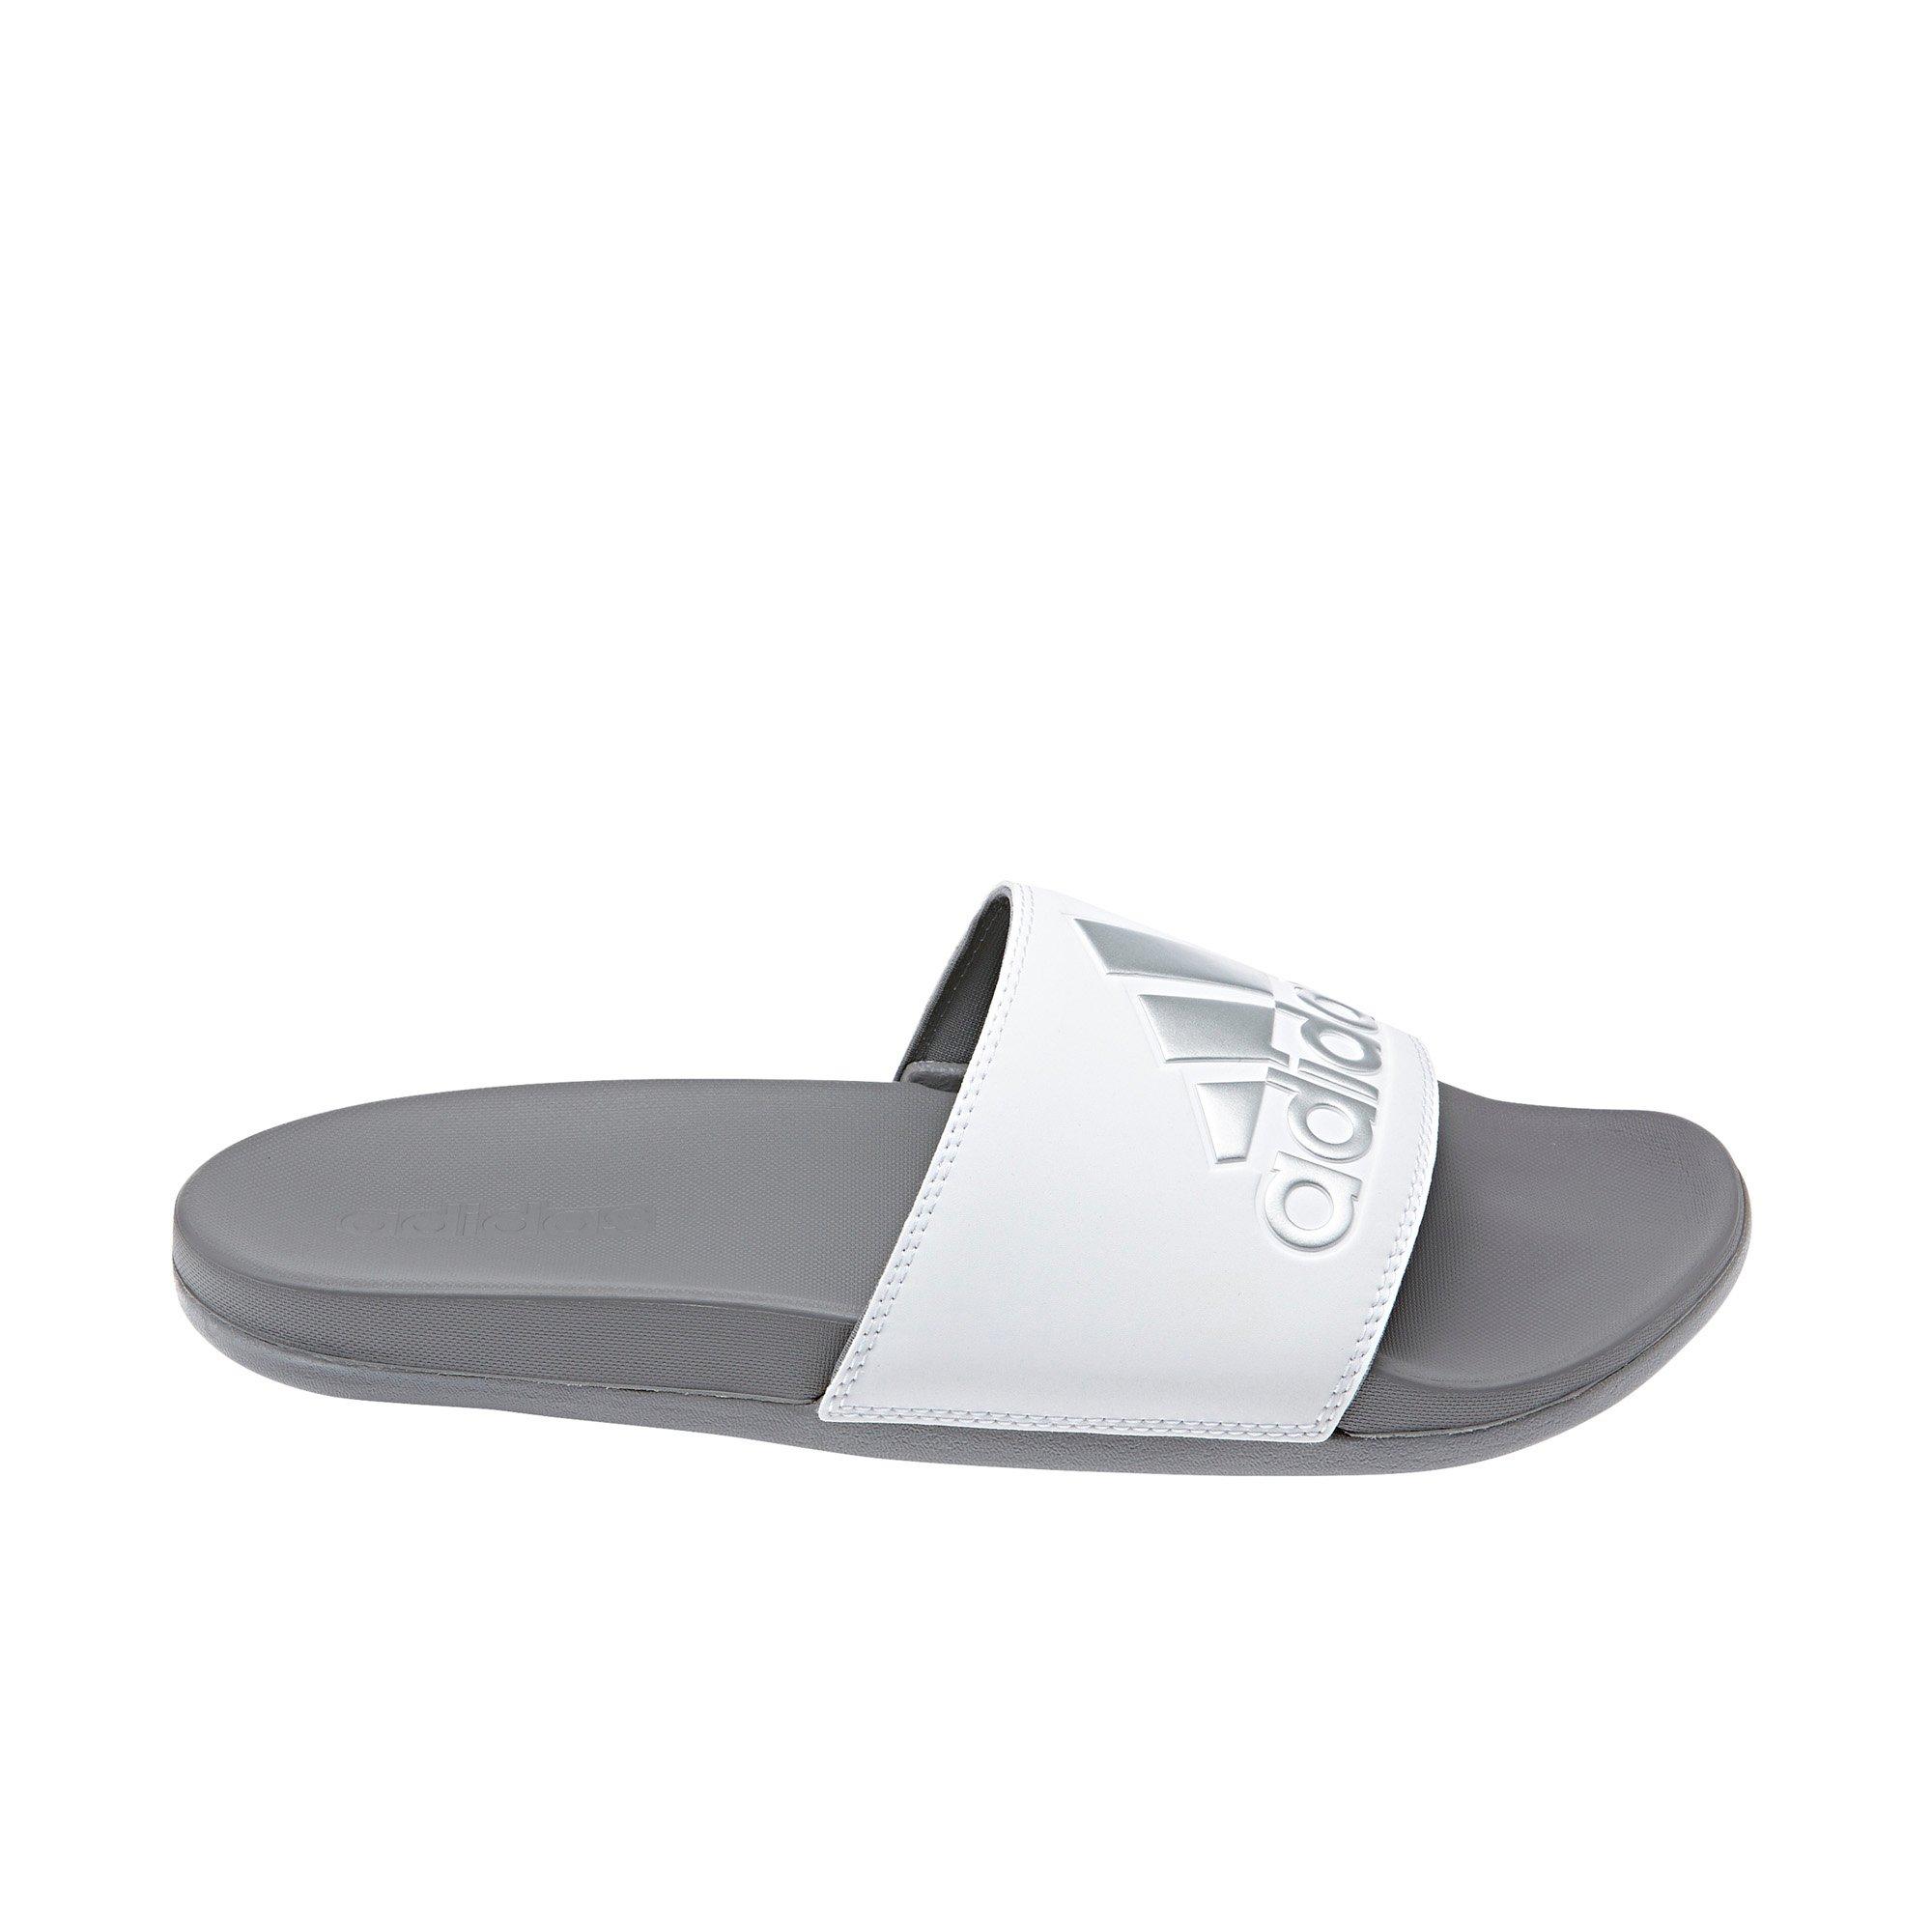 adidas slides grey and white